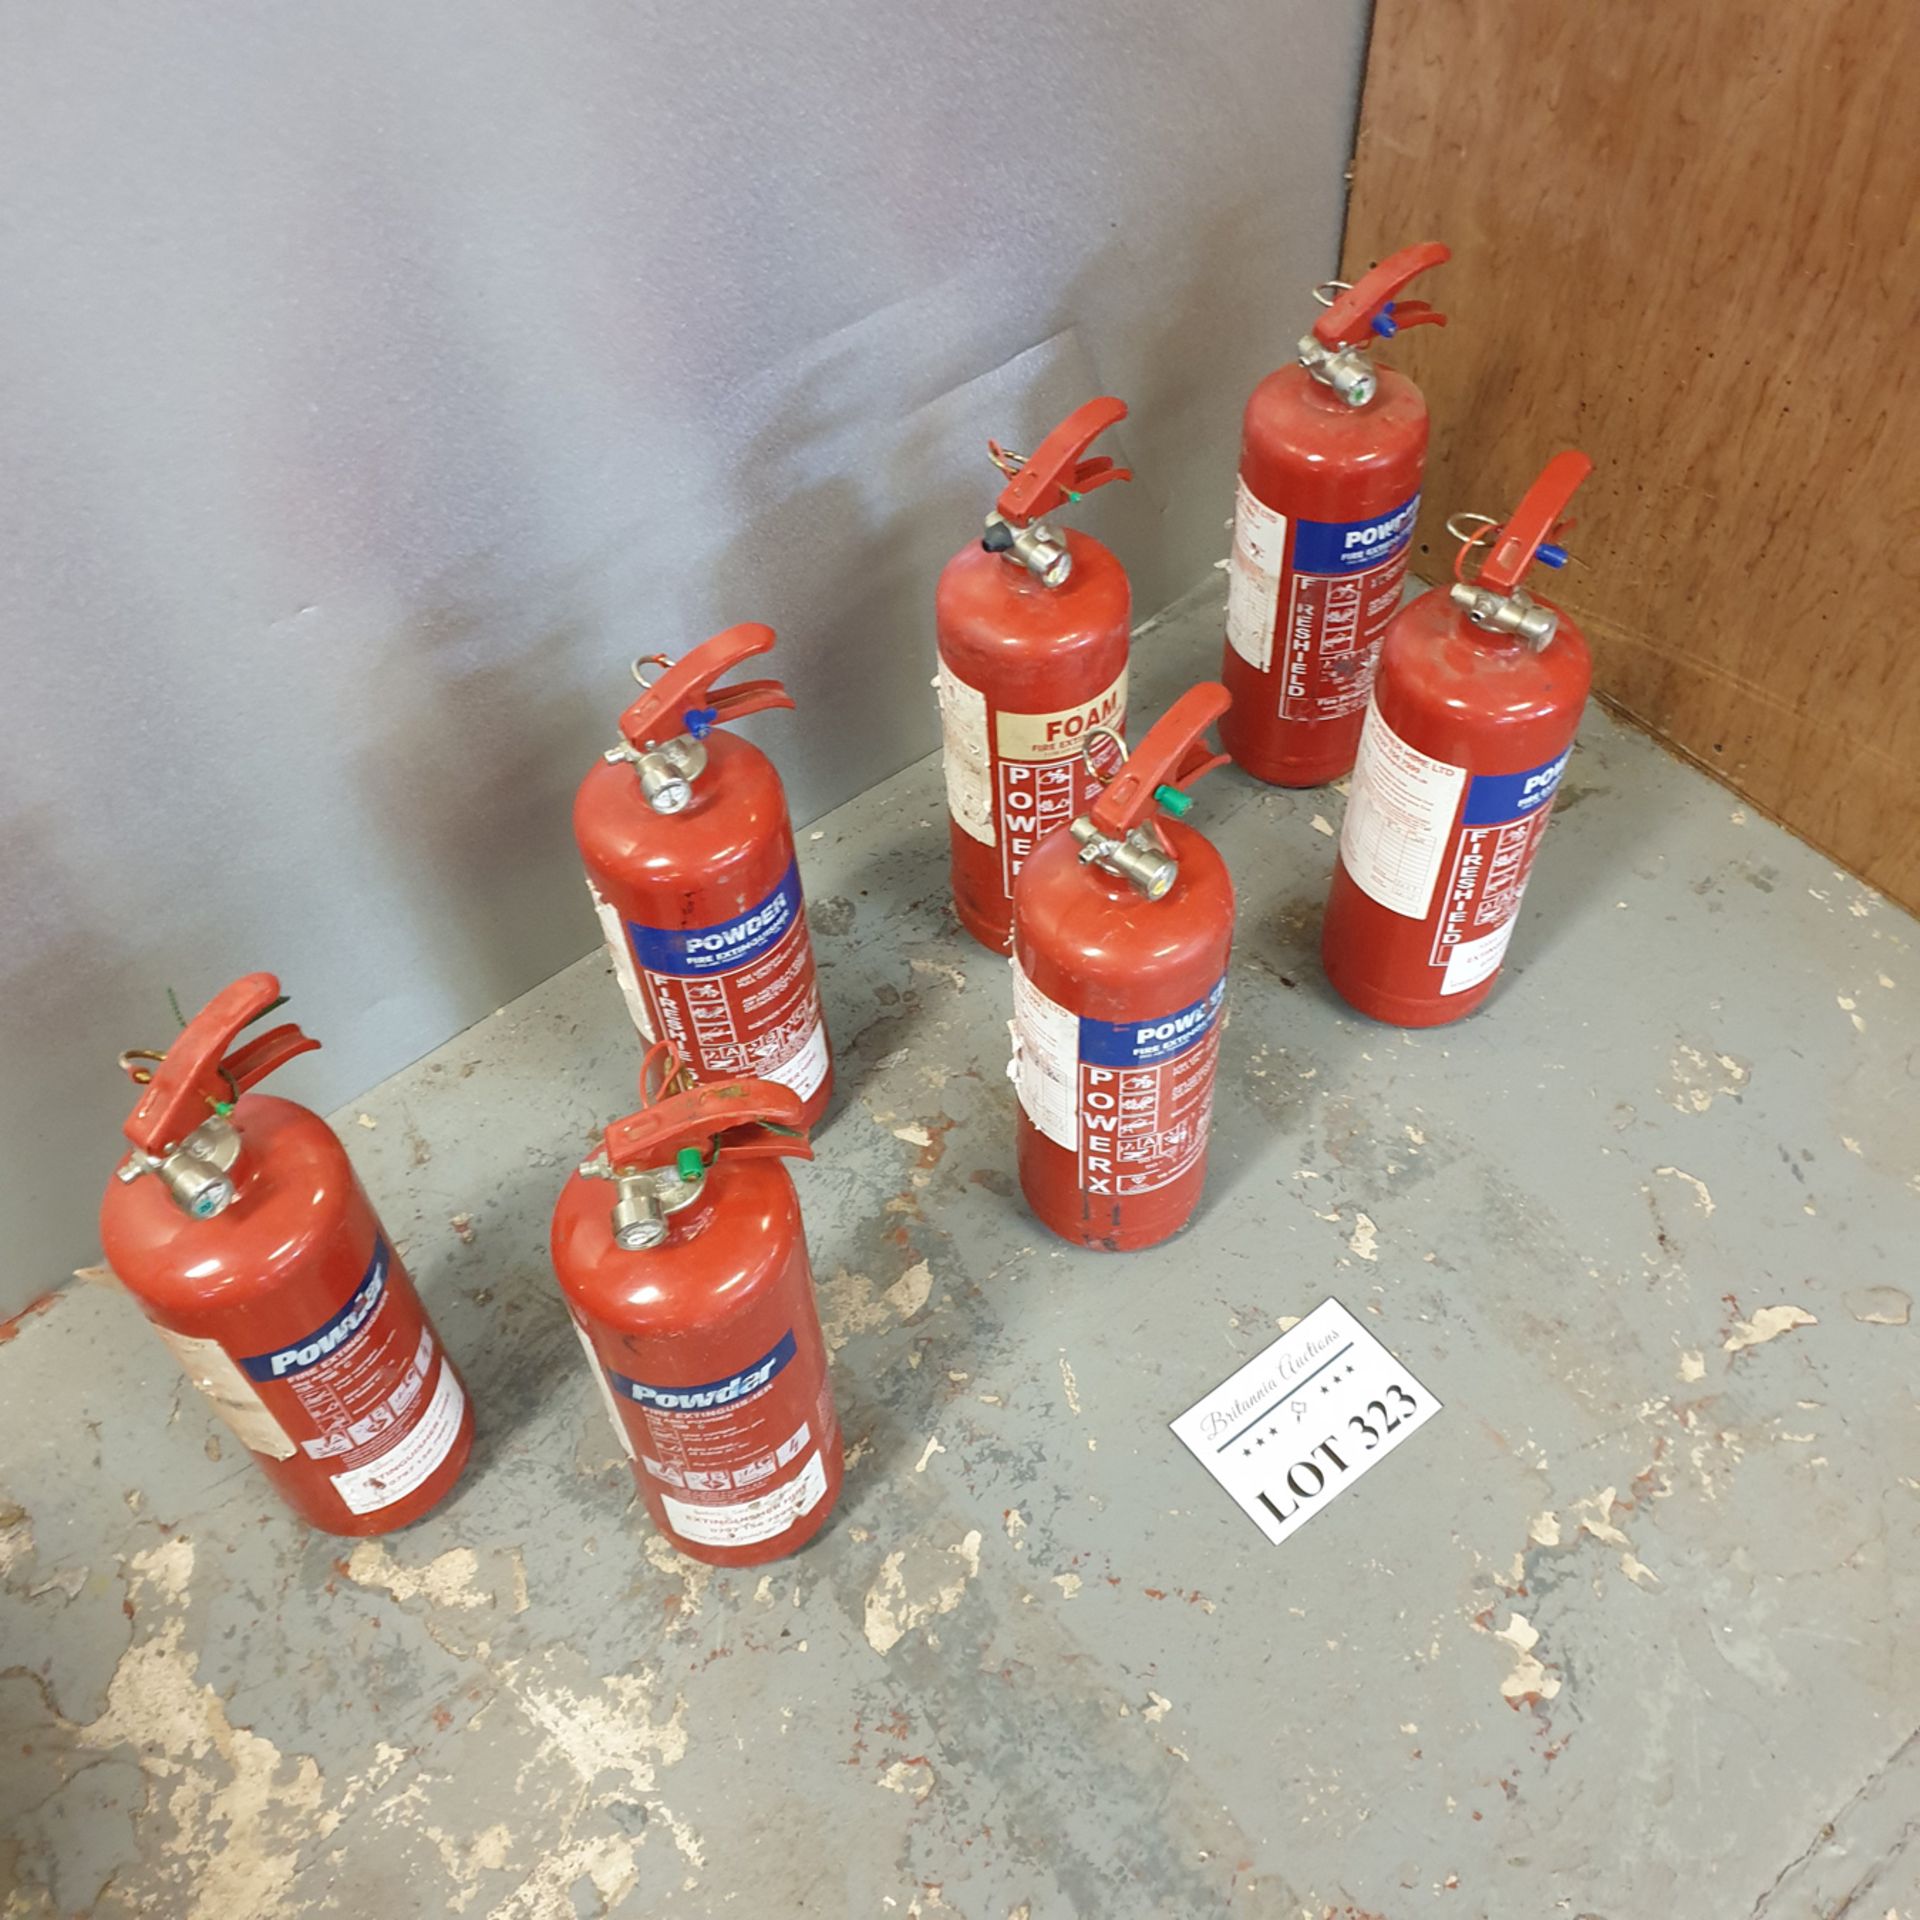 Powder Fire Extinguishers X 7. - Image 3 of 3